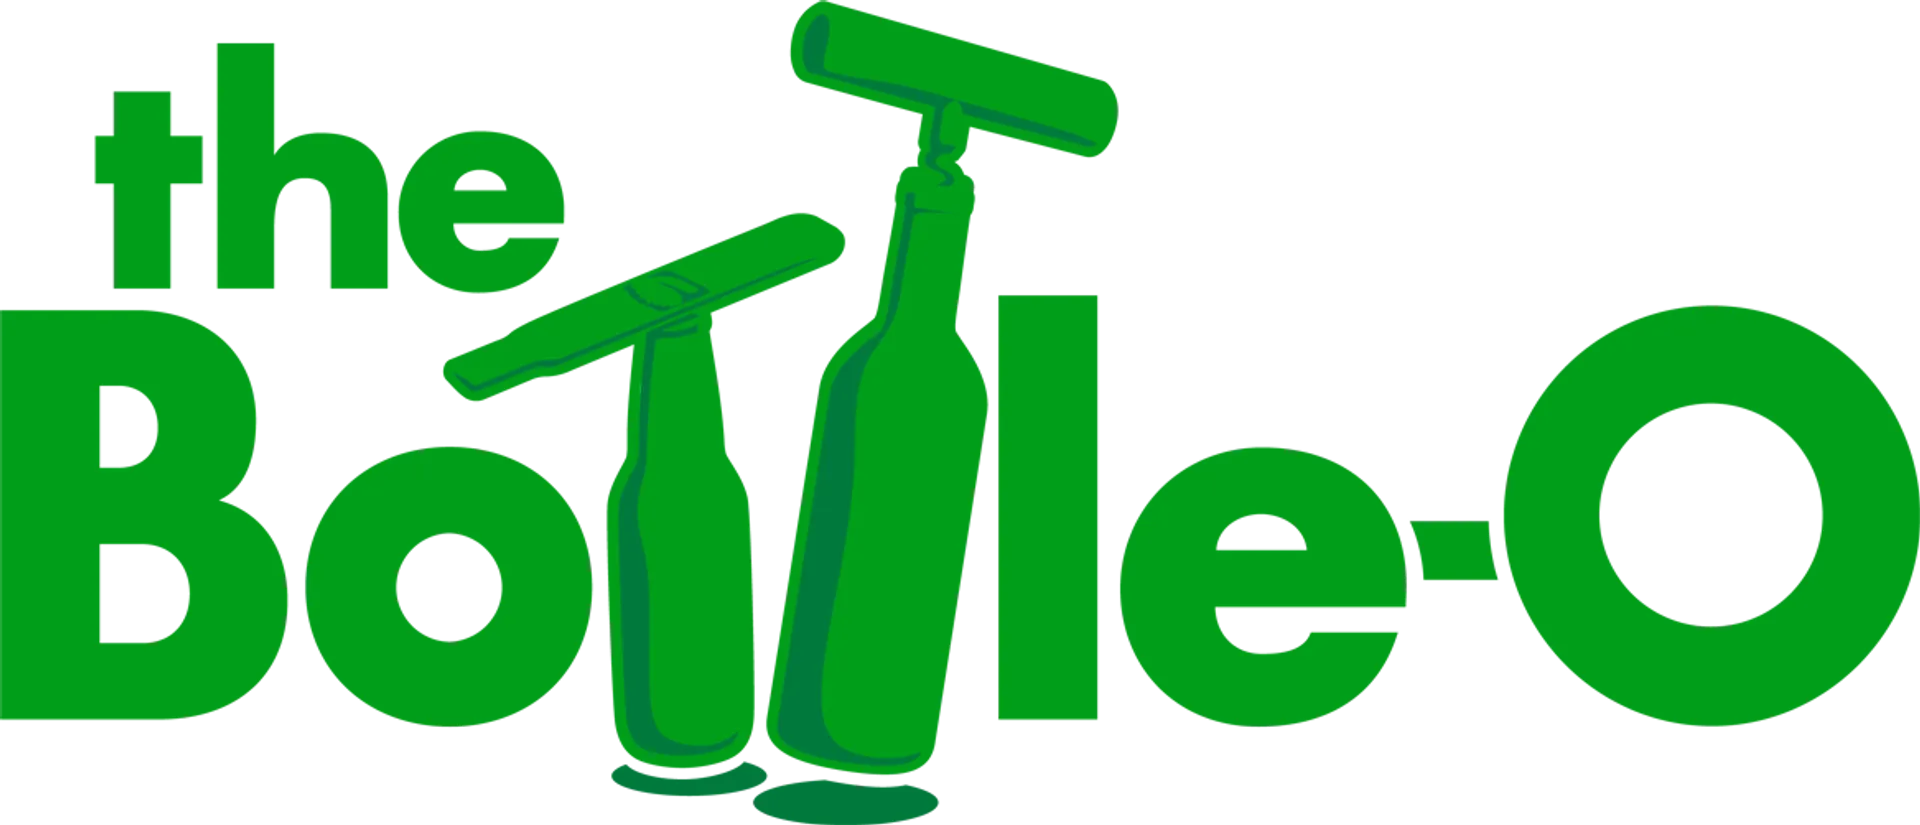 THE BOTTLE-O logo